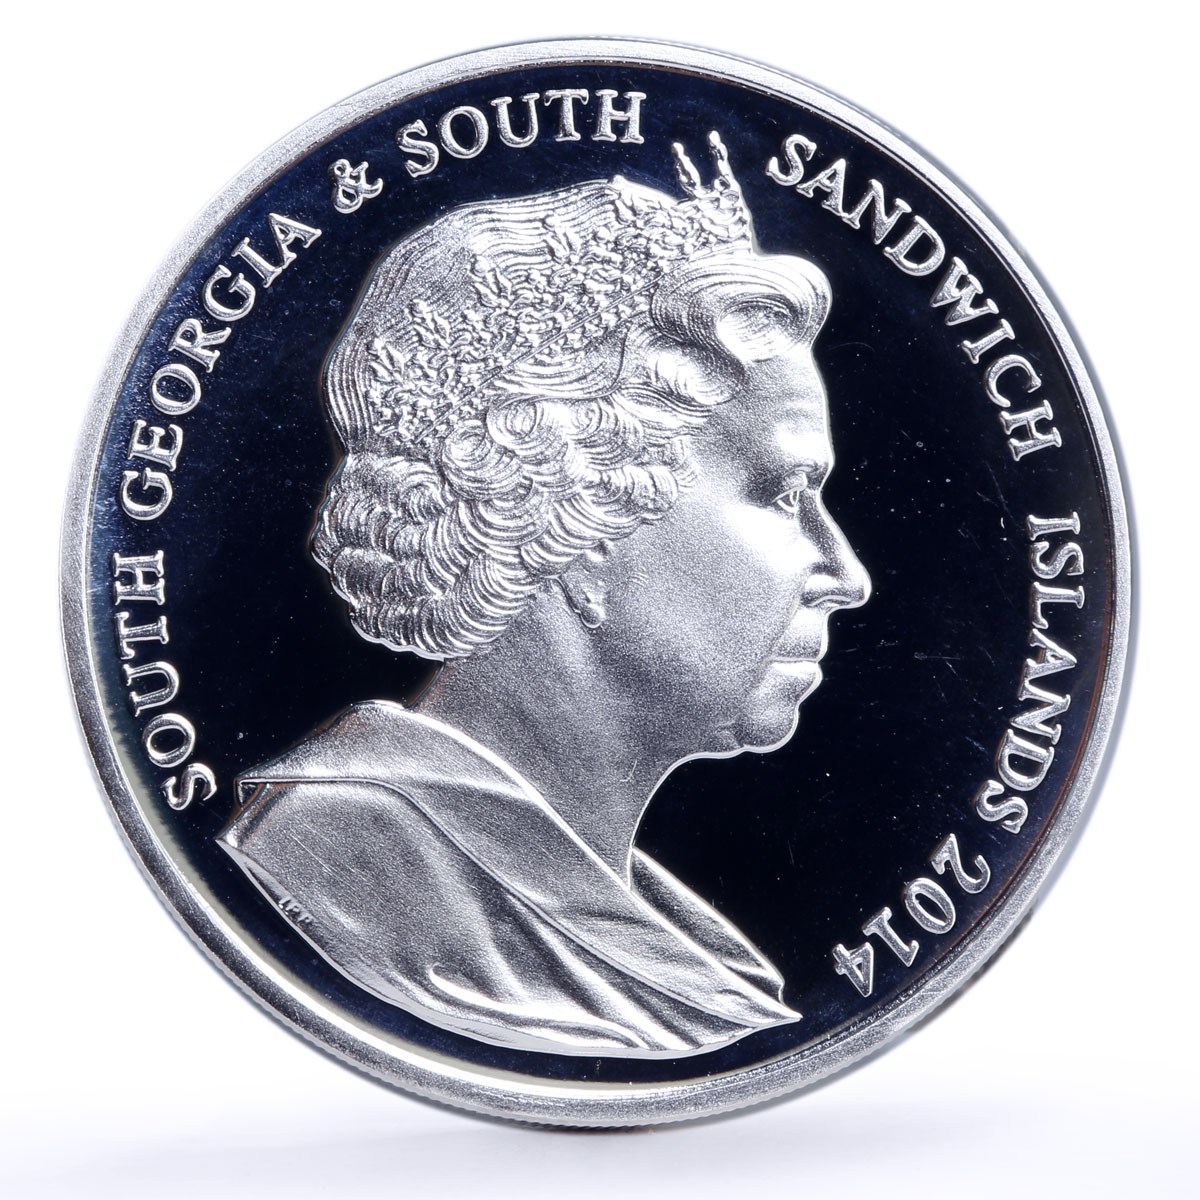 Sandwich Islands 2 pounds Seafaring Endurance Ship Clipper silver coin 2014